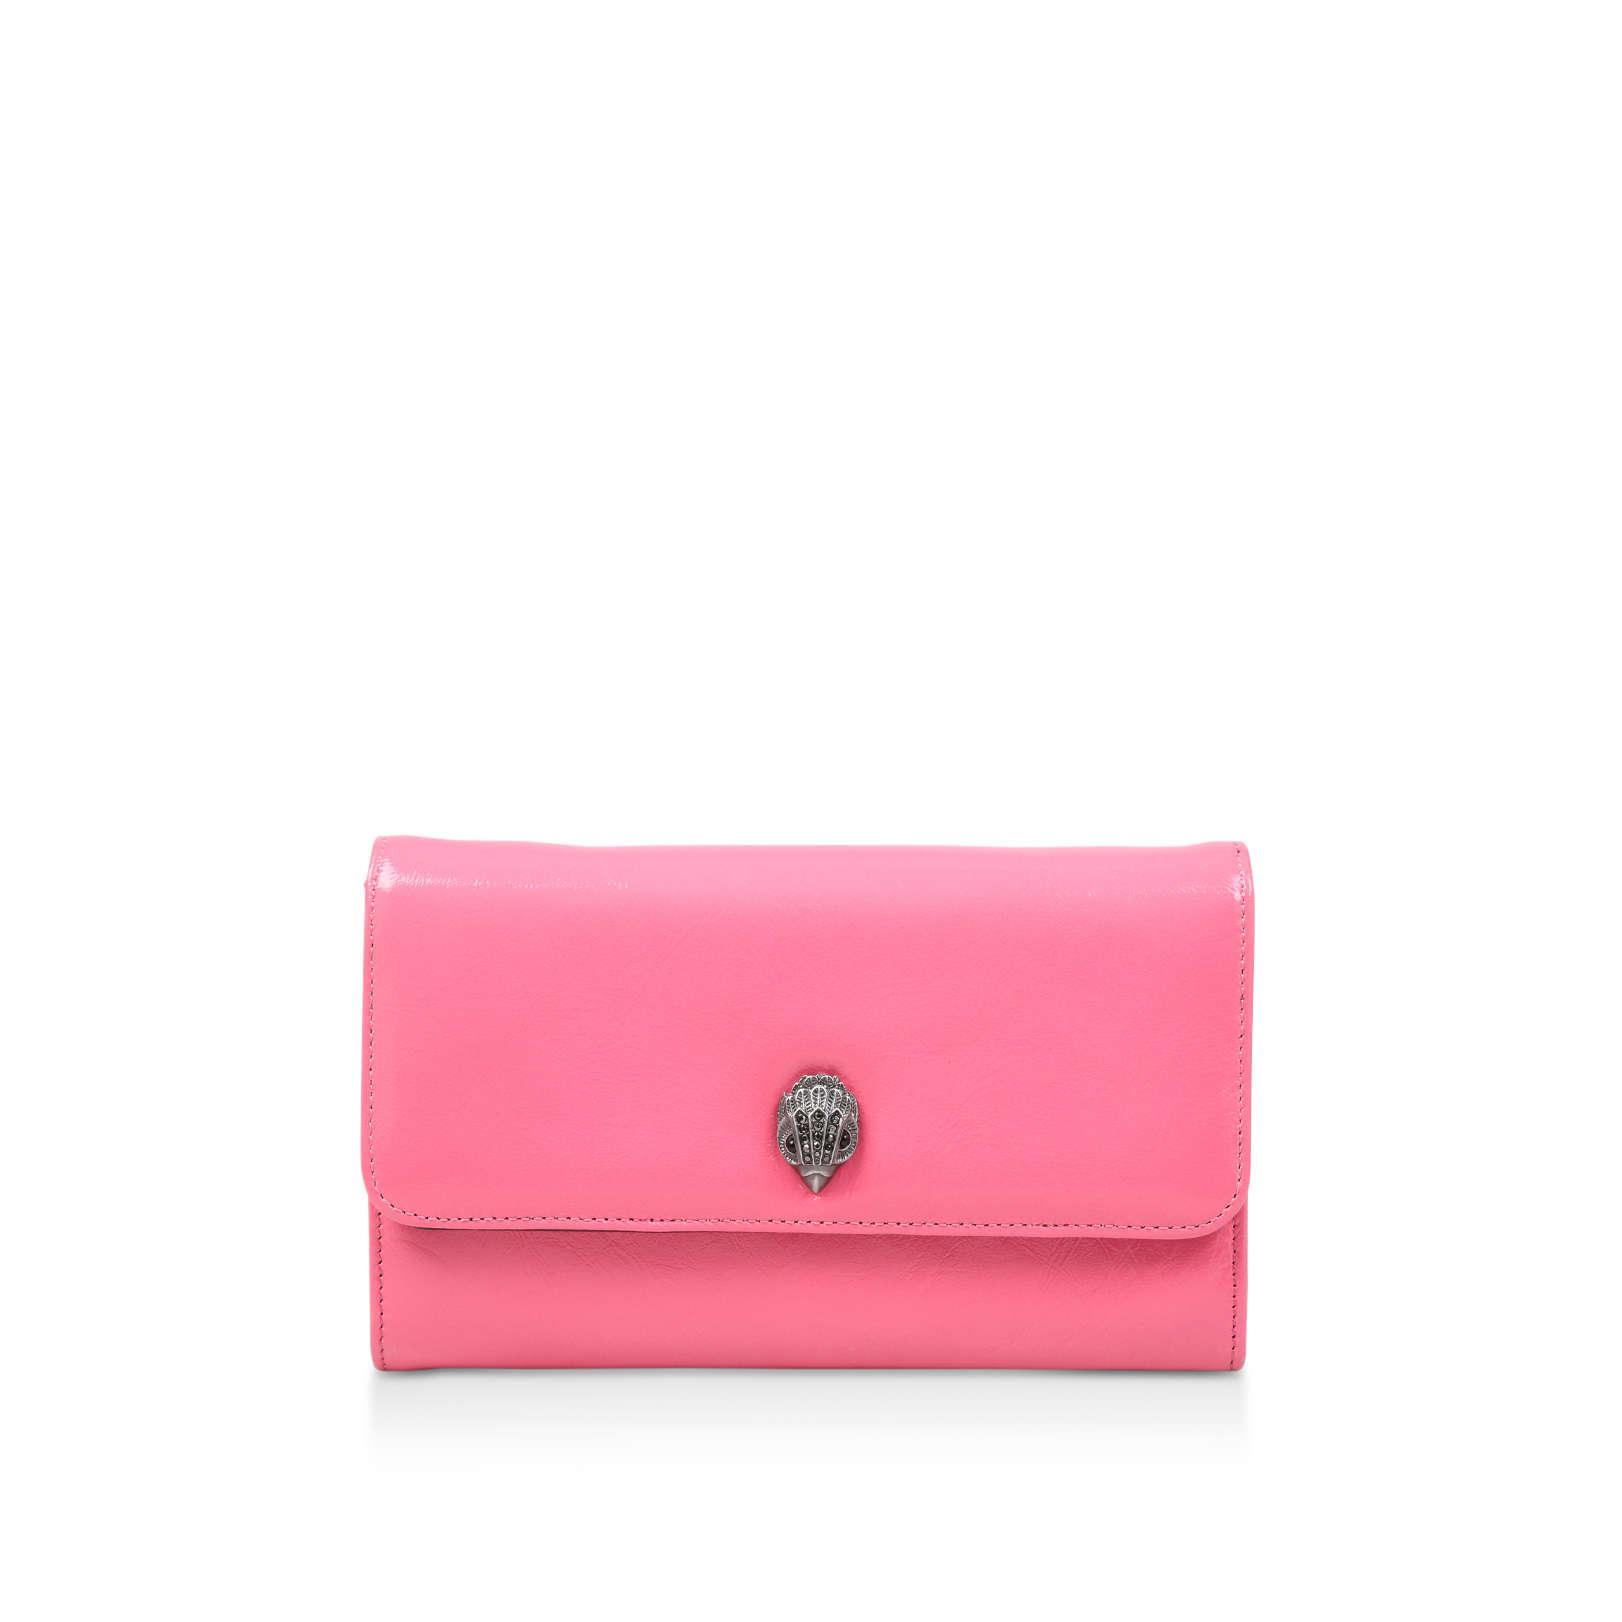 Kurt Geiger Womens Kensington Chain Wallet in Pink - Lyst